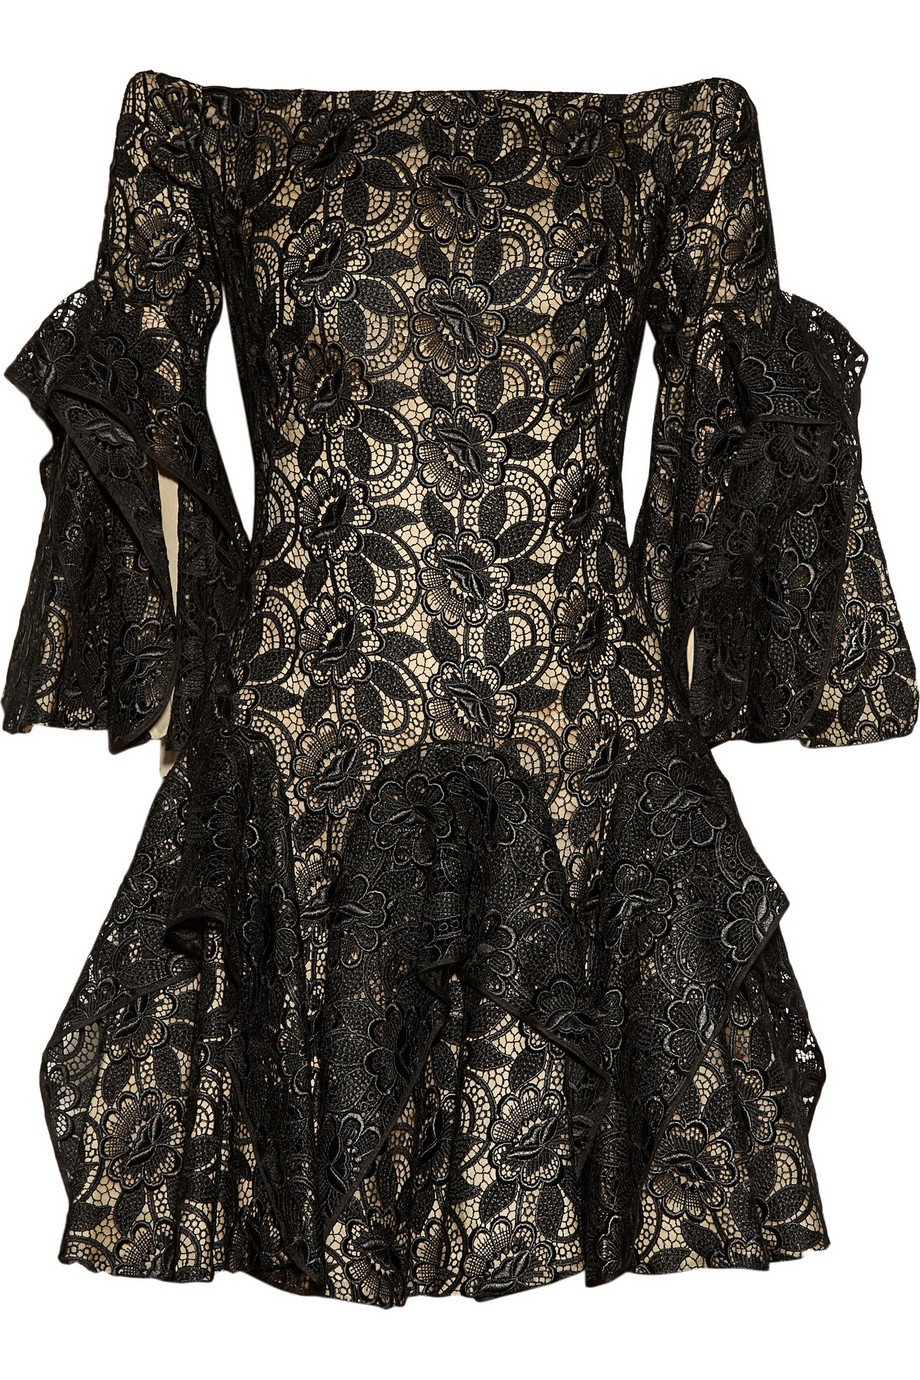 Alexander mcqueen Moth-print Crepe Dress in Black | Lyst